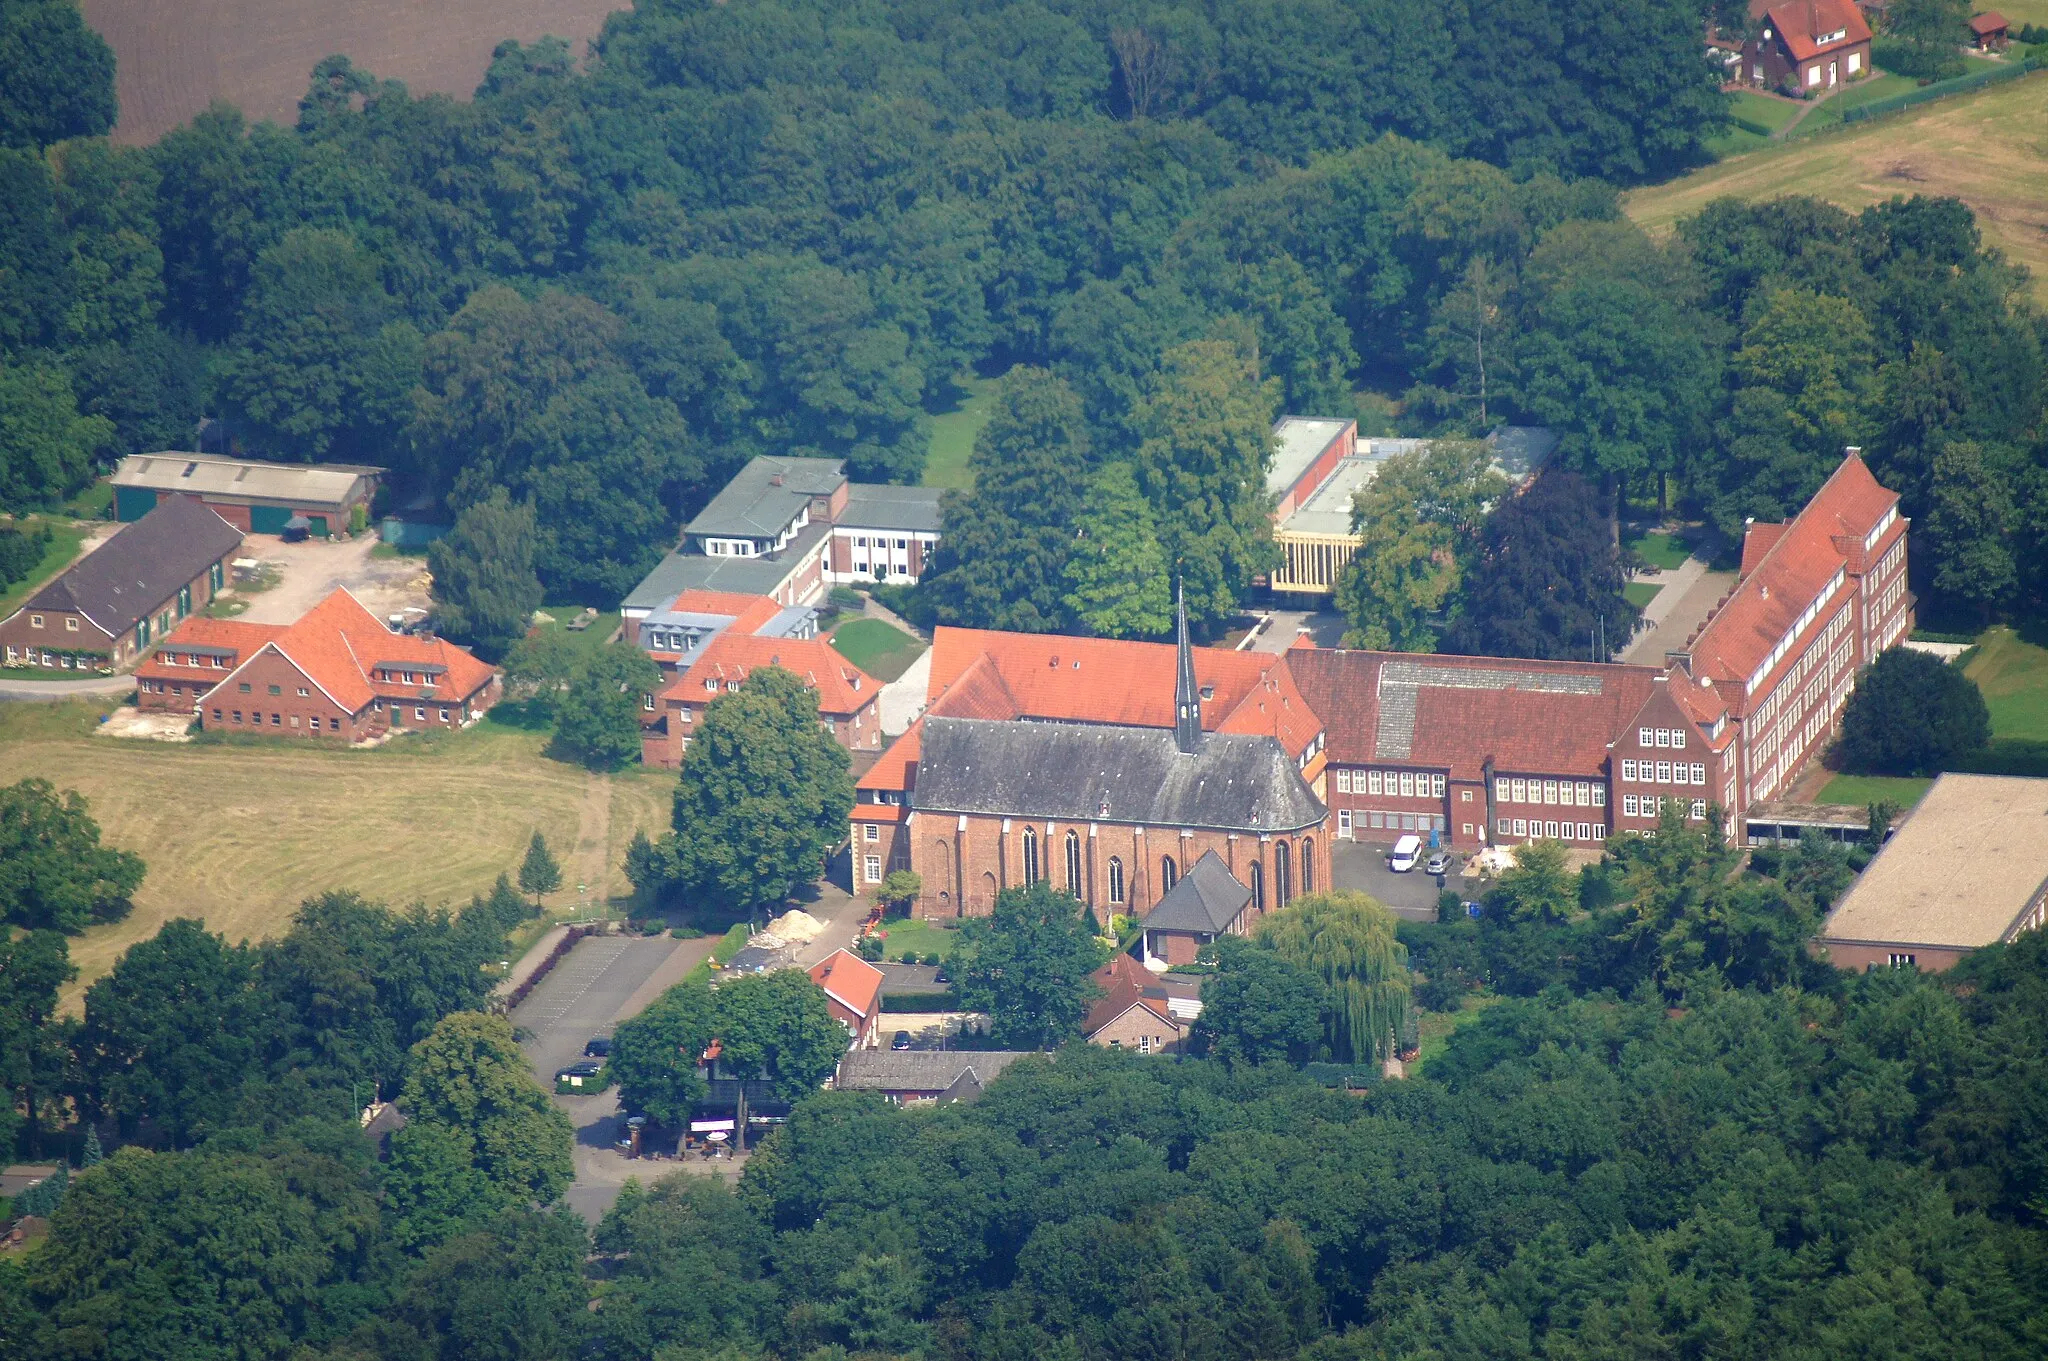 Photo showing: The monastery Mariengarden and the church St. Marien in Burlo, city of en:Borken, North Rhine-Westphalia, Germany.